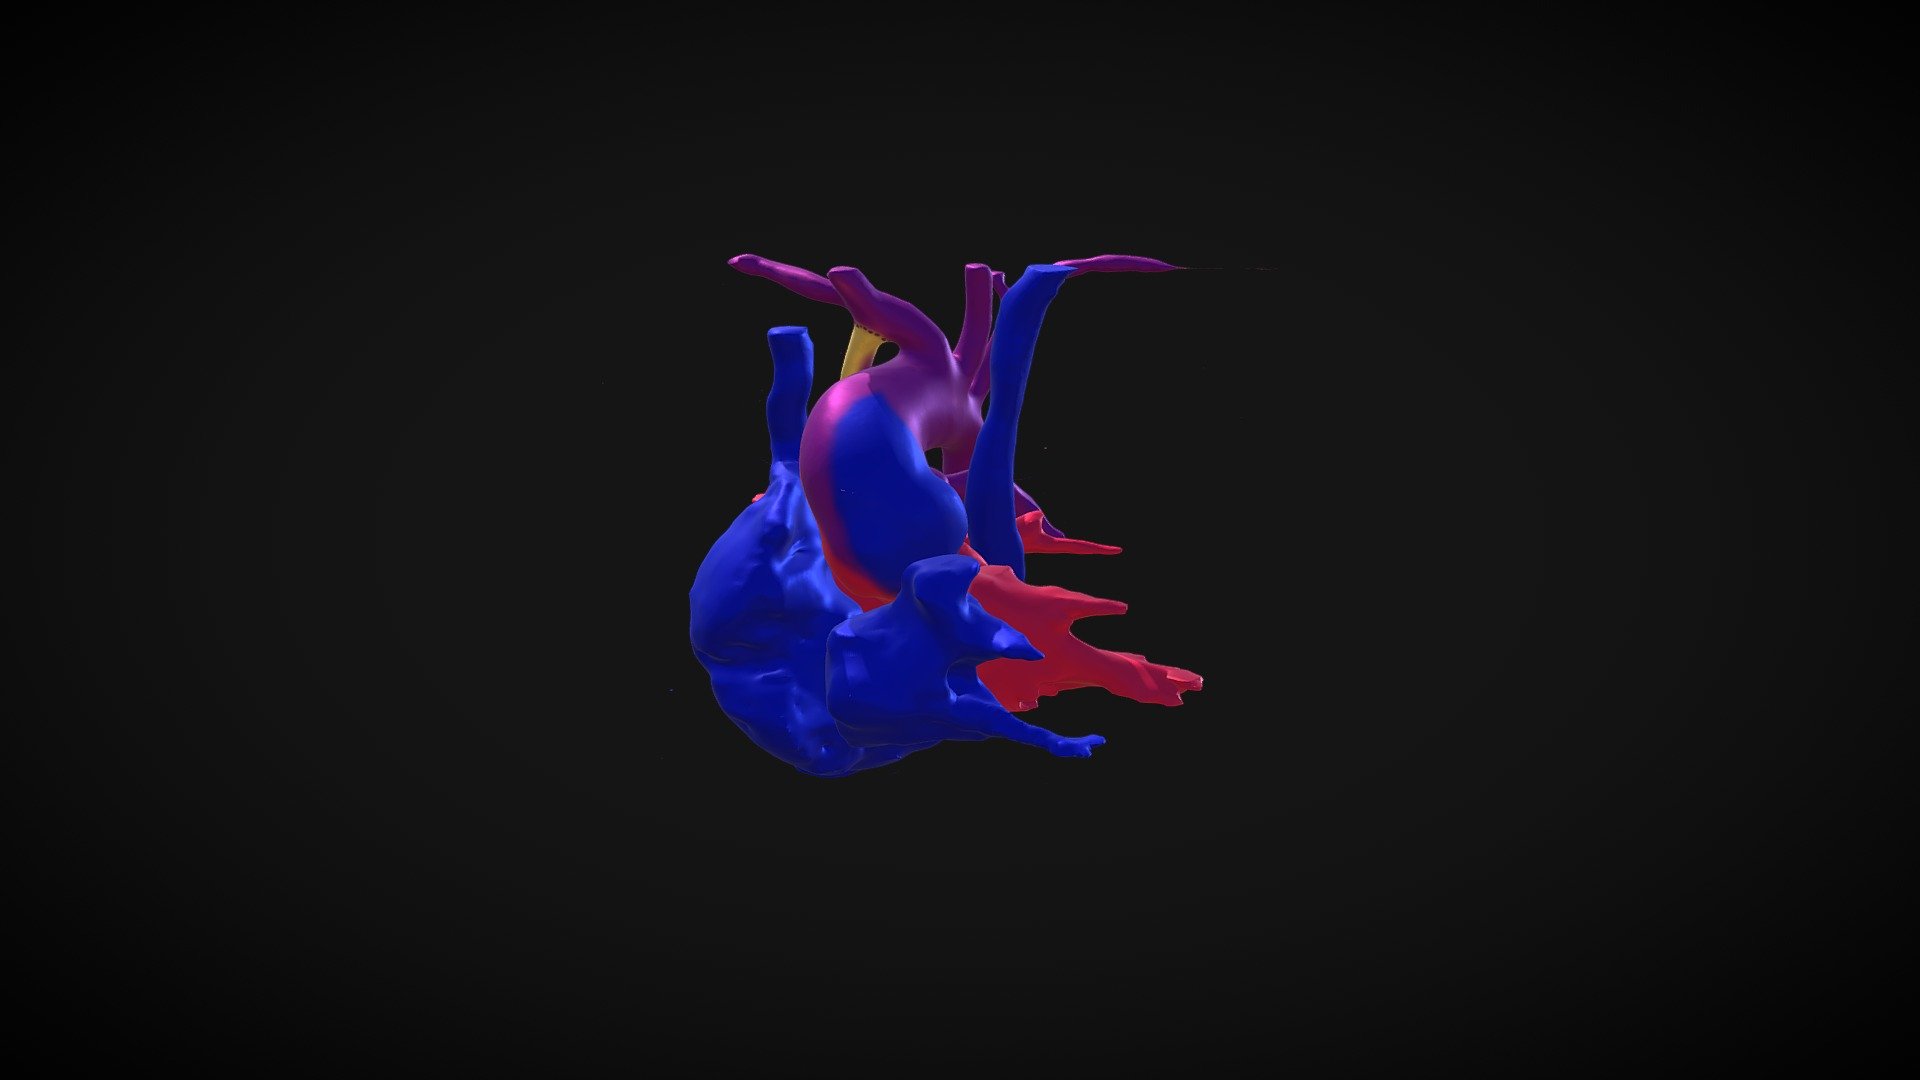 Shunted heart in technicolor